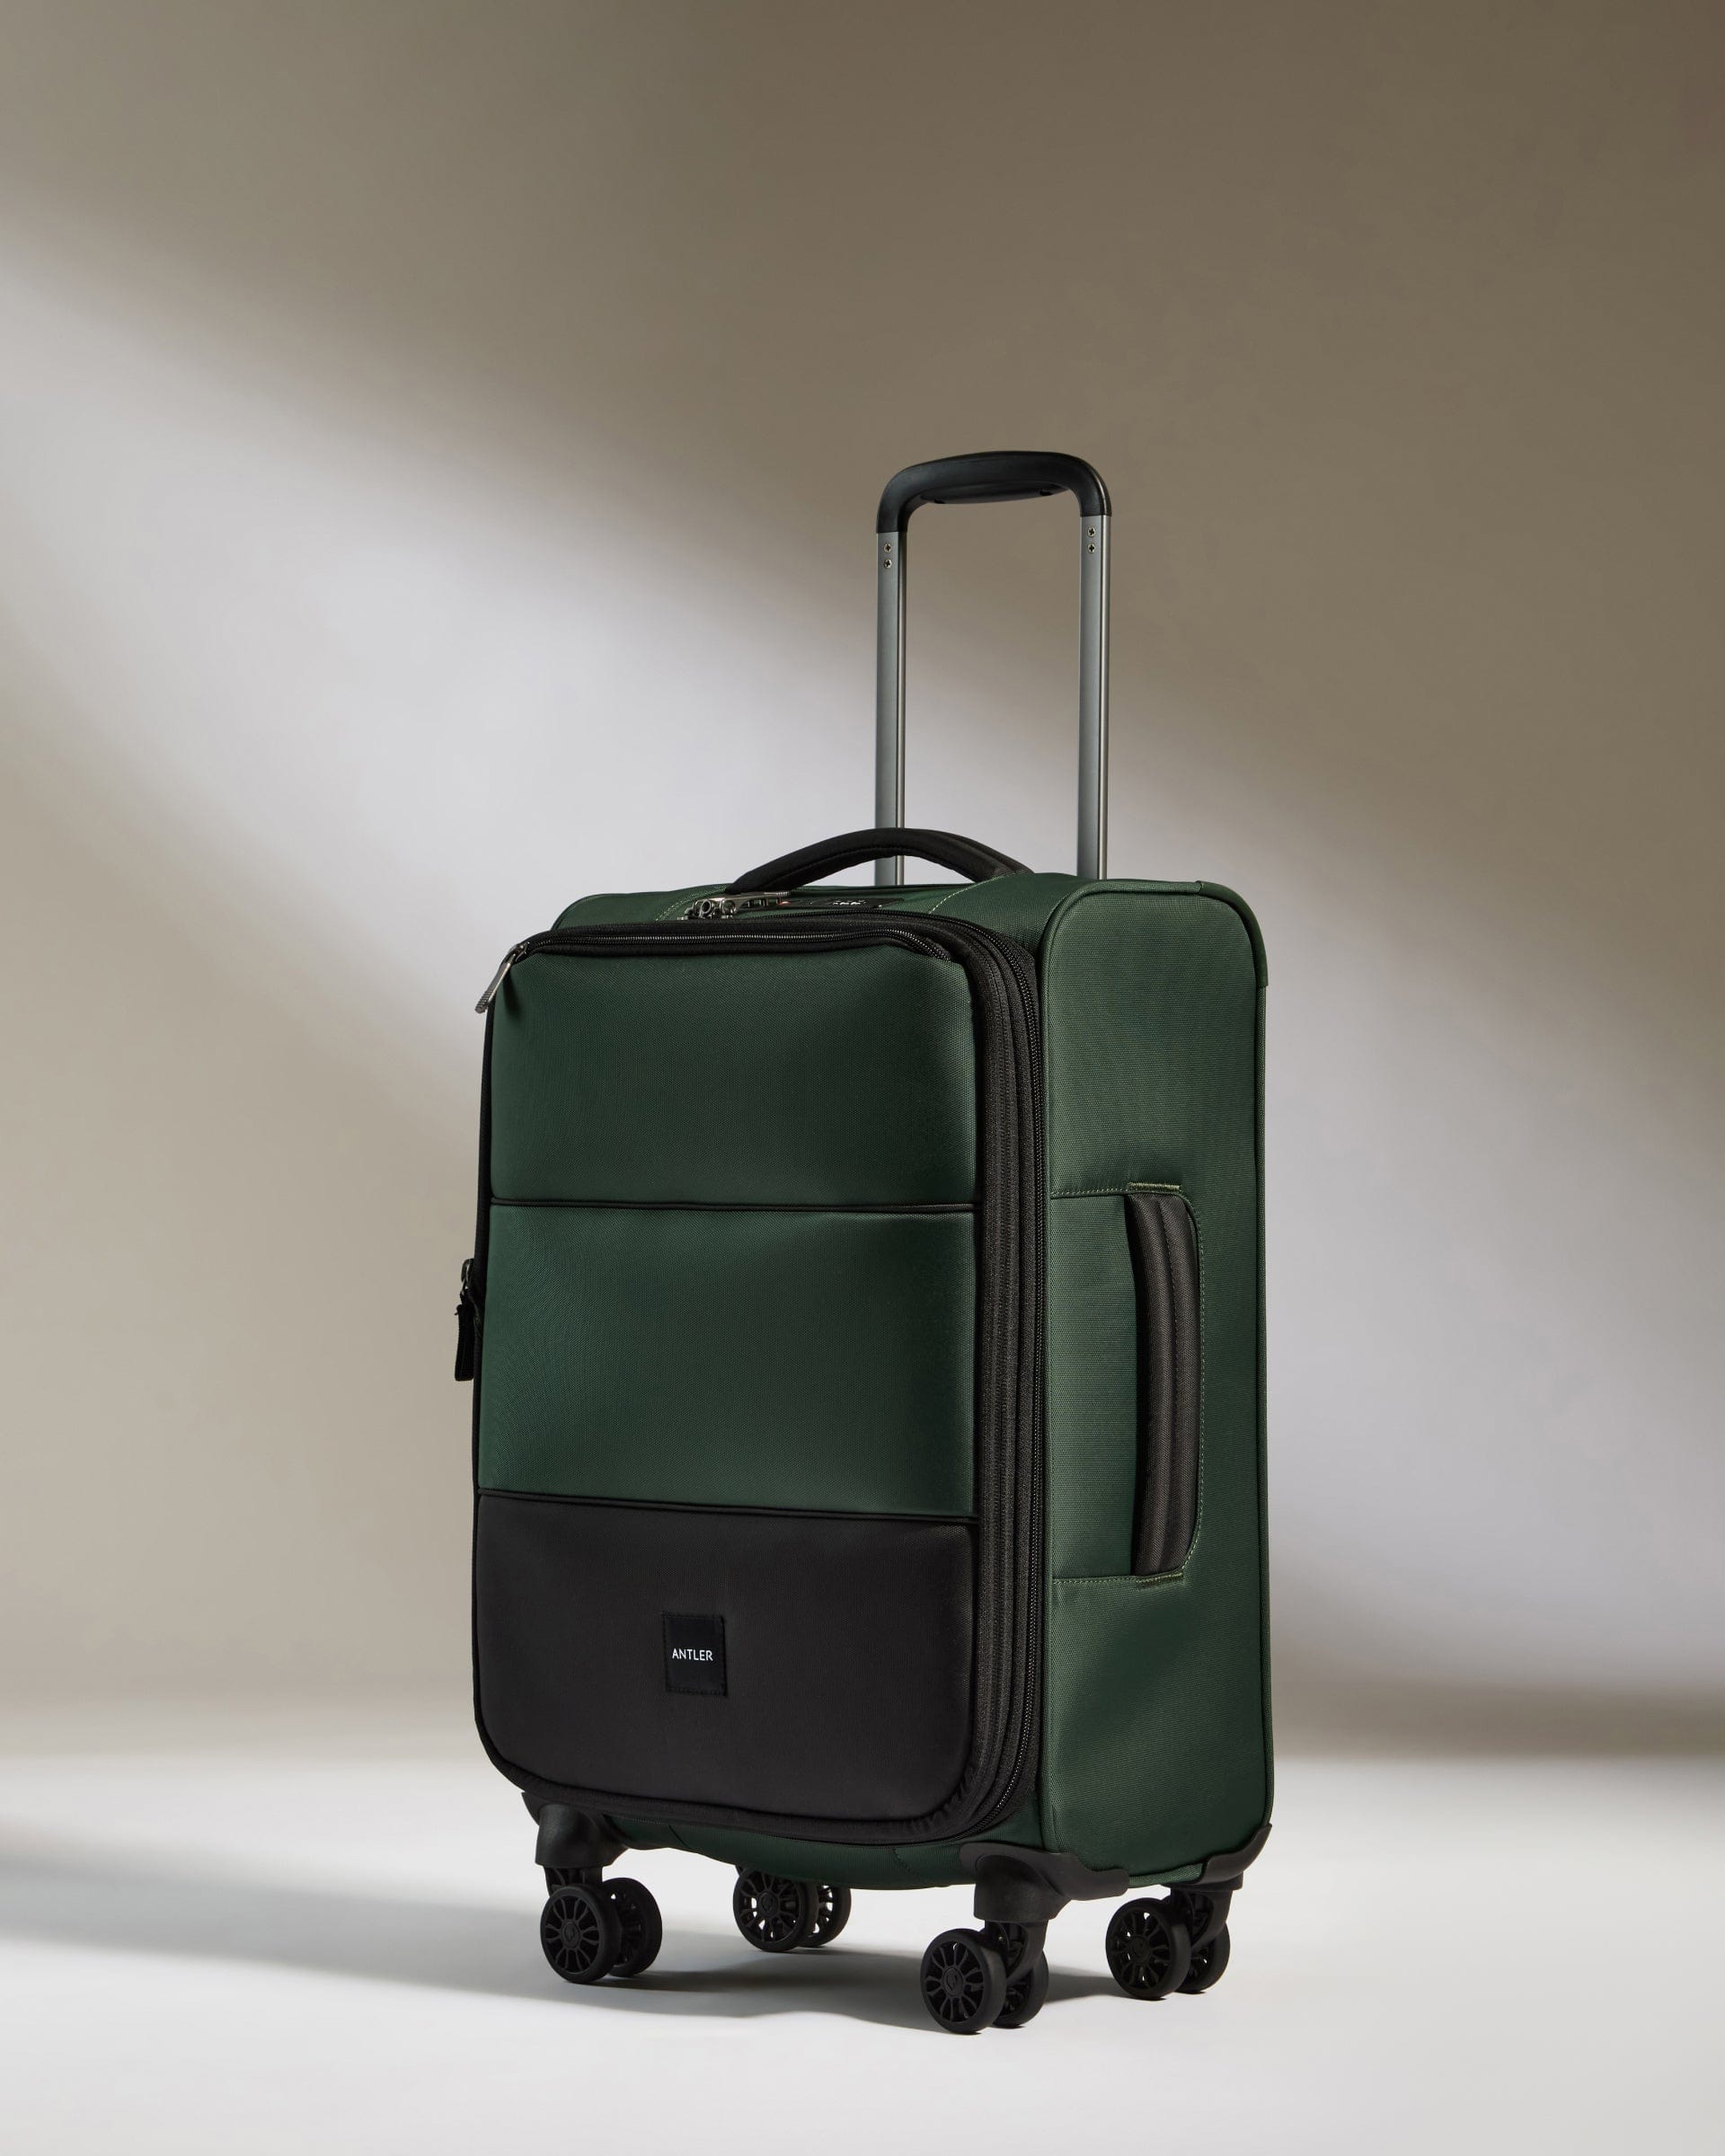 View Soft Stripe Cabin Suitcase In Antler Green Size 20cm x 55cm x 35cm information